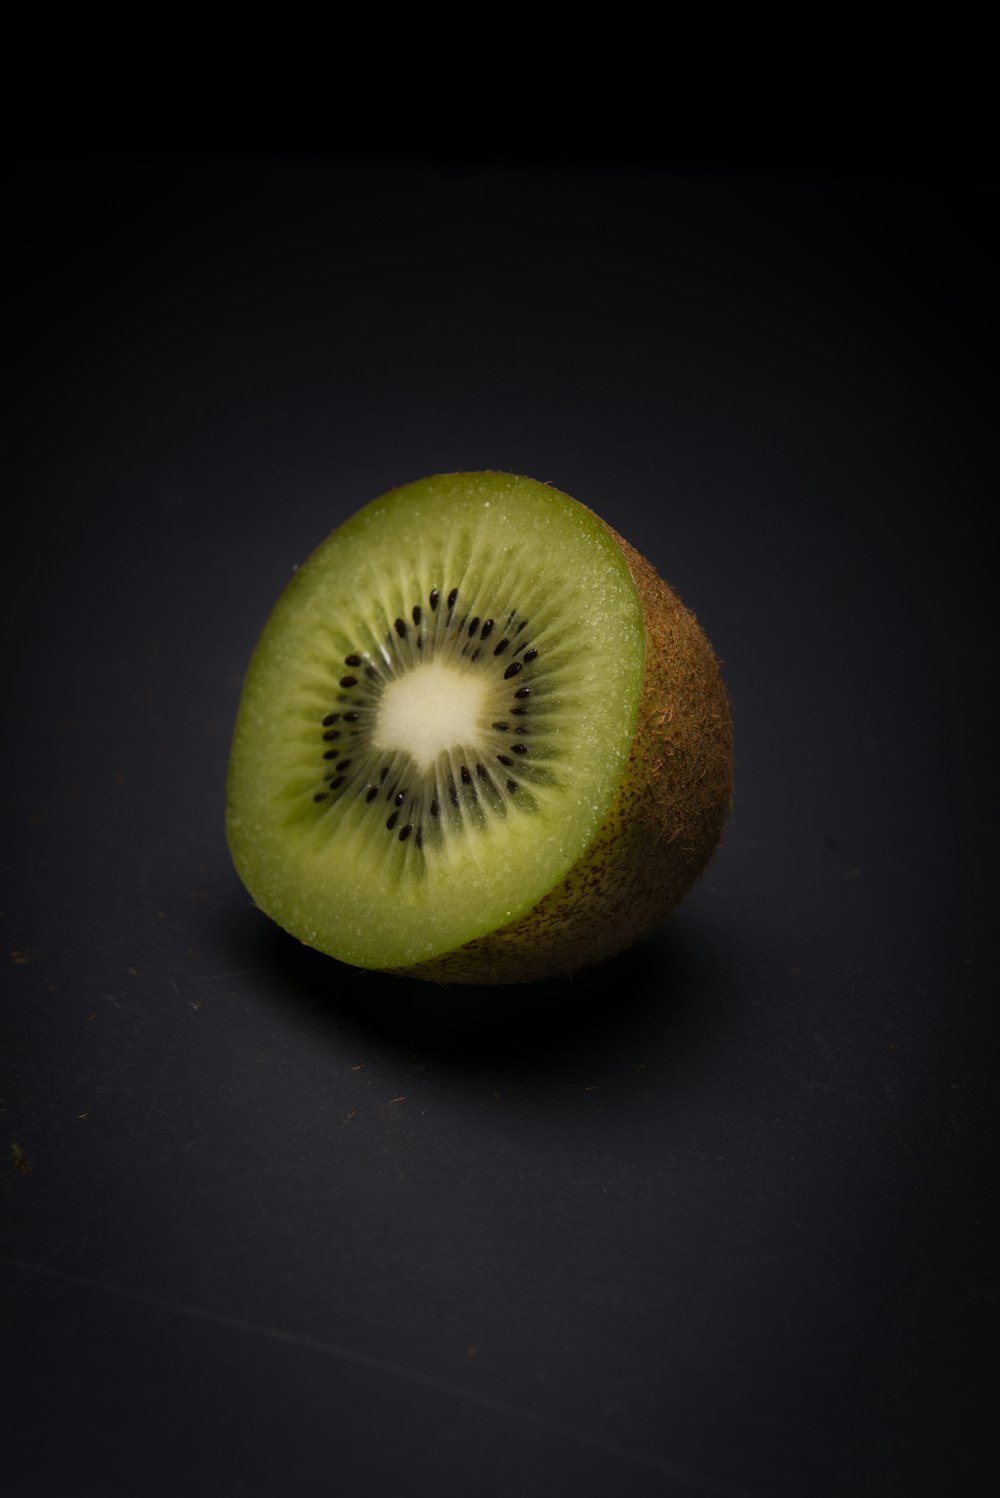 a kiwi cut in half on a black surface